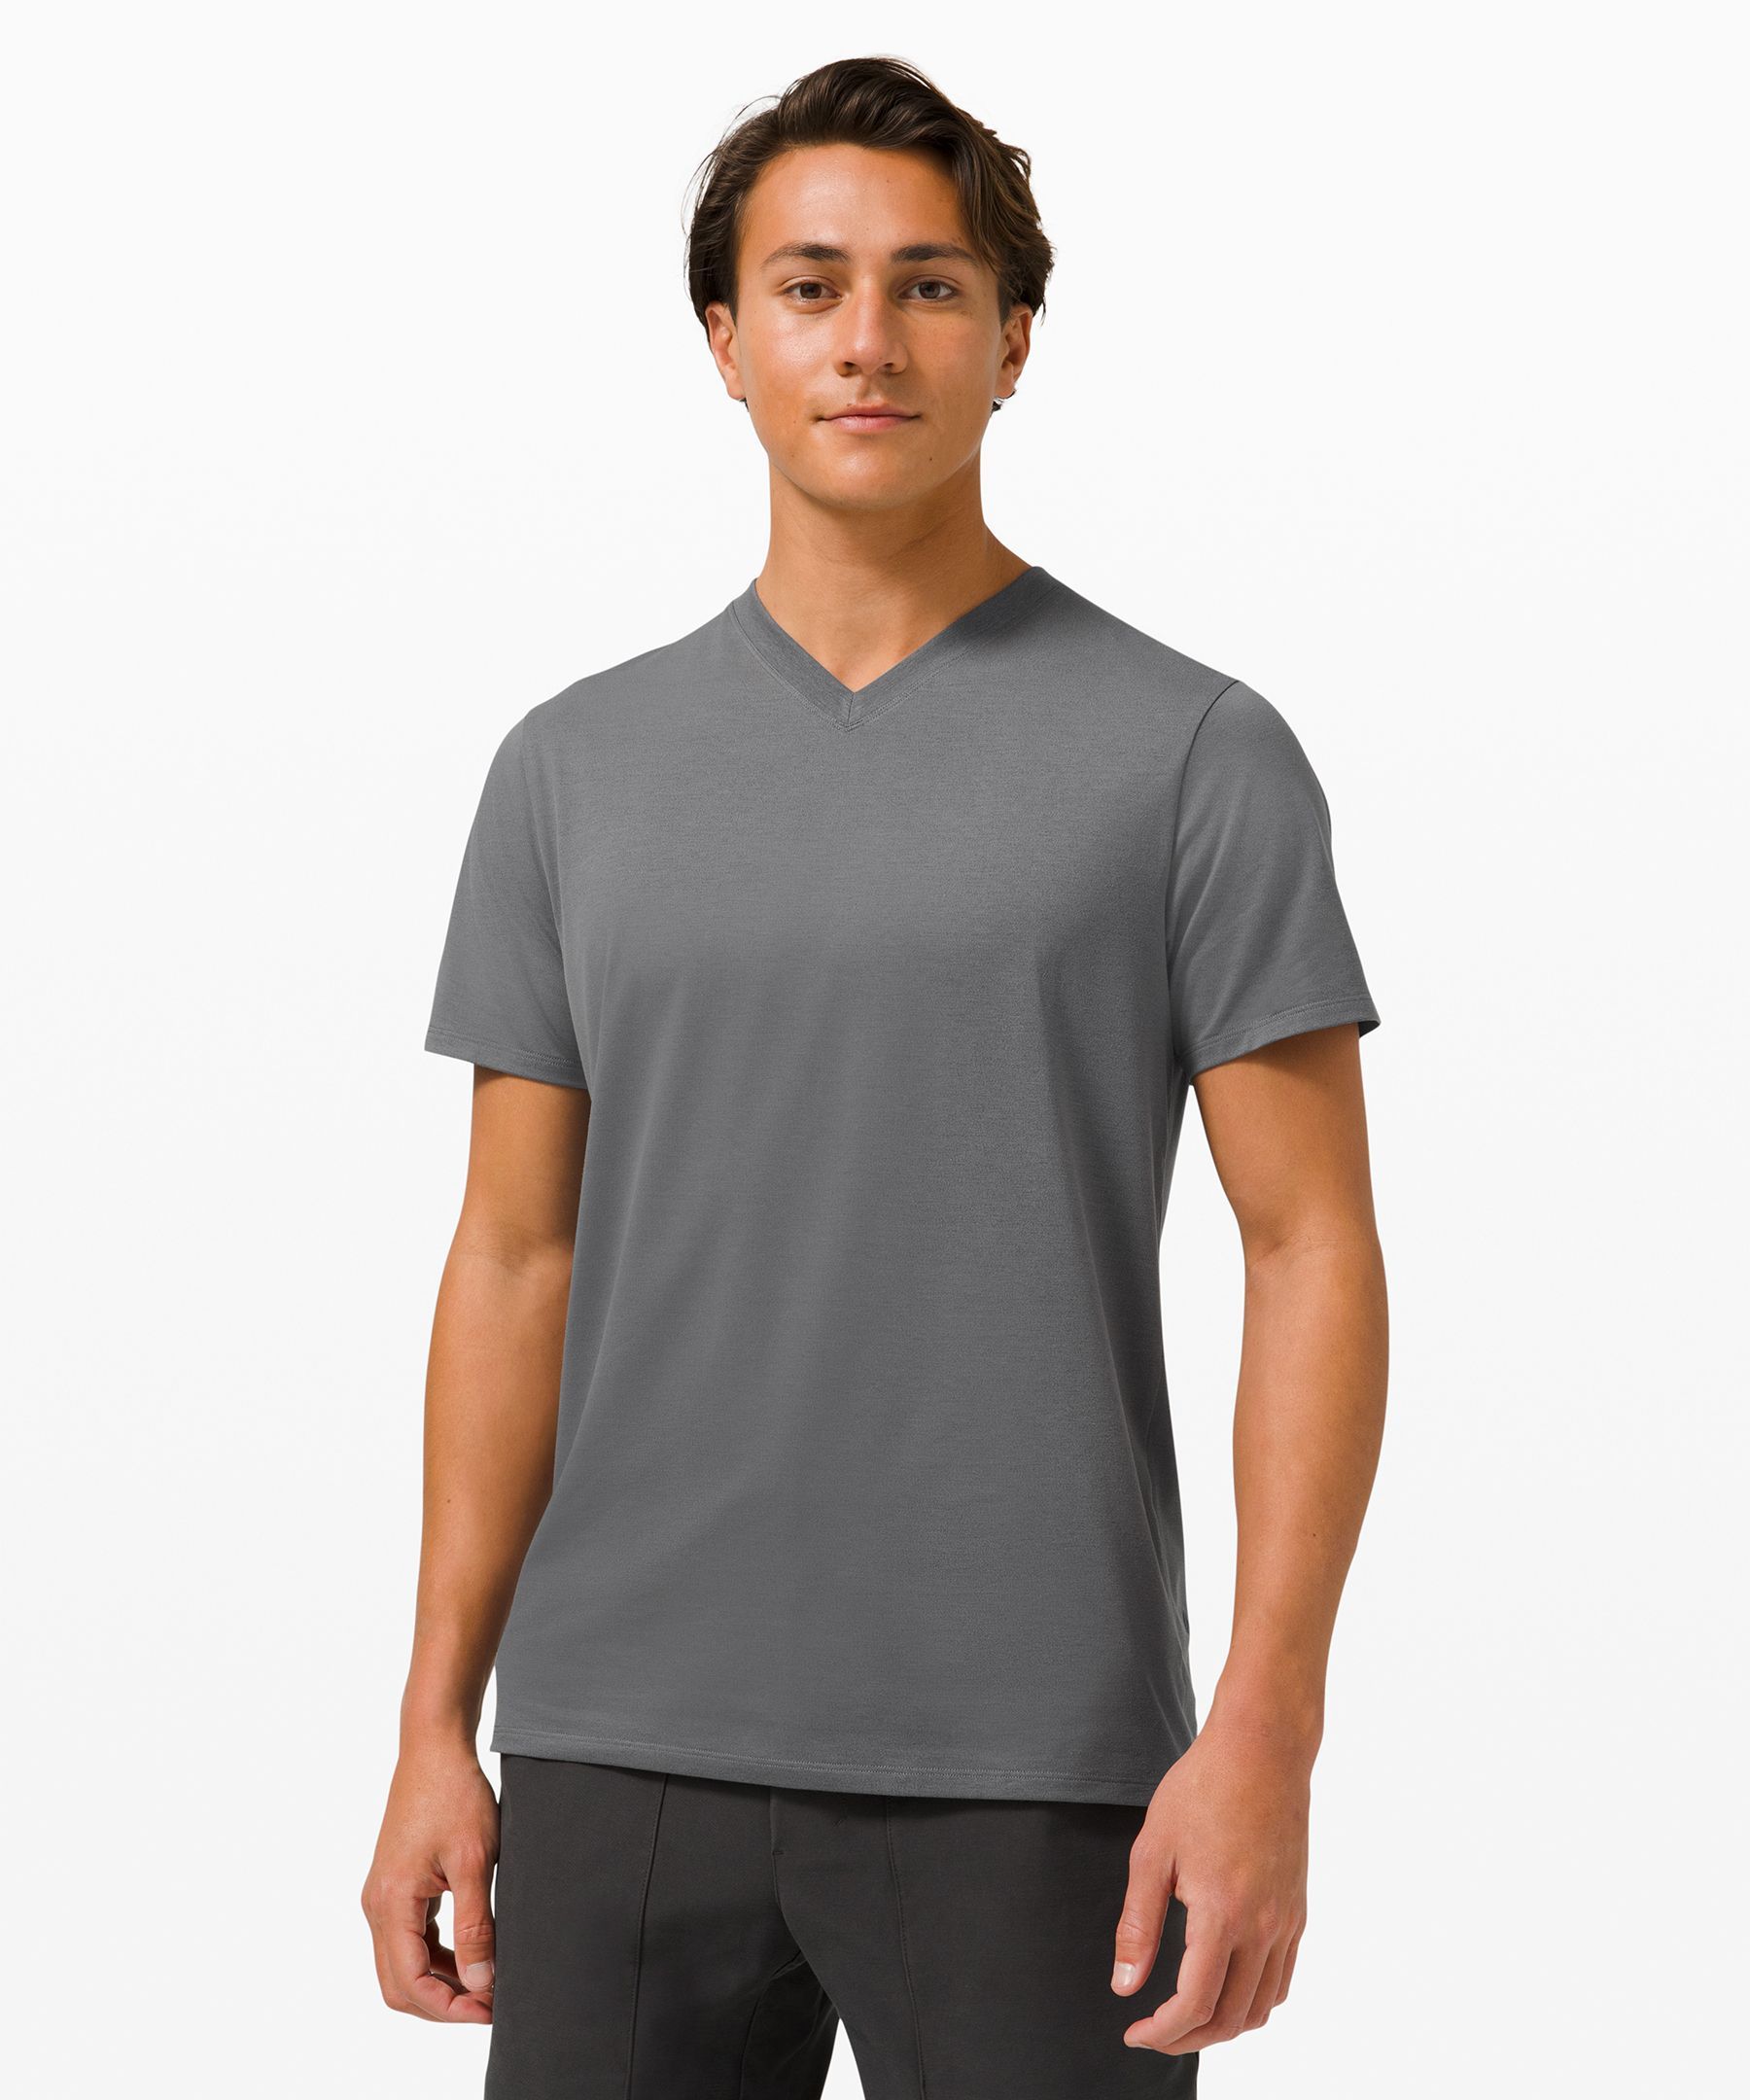 Meio, Light Gray, MT Solid Under Shirts Texere Mens V-Neck Luxury Undershirt 